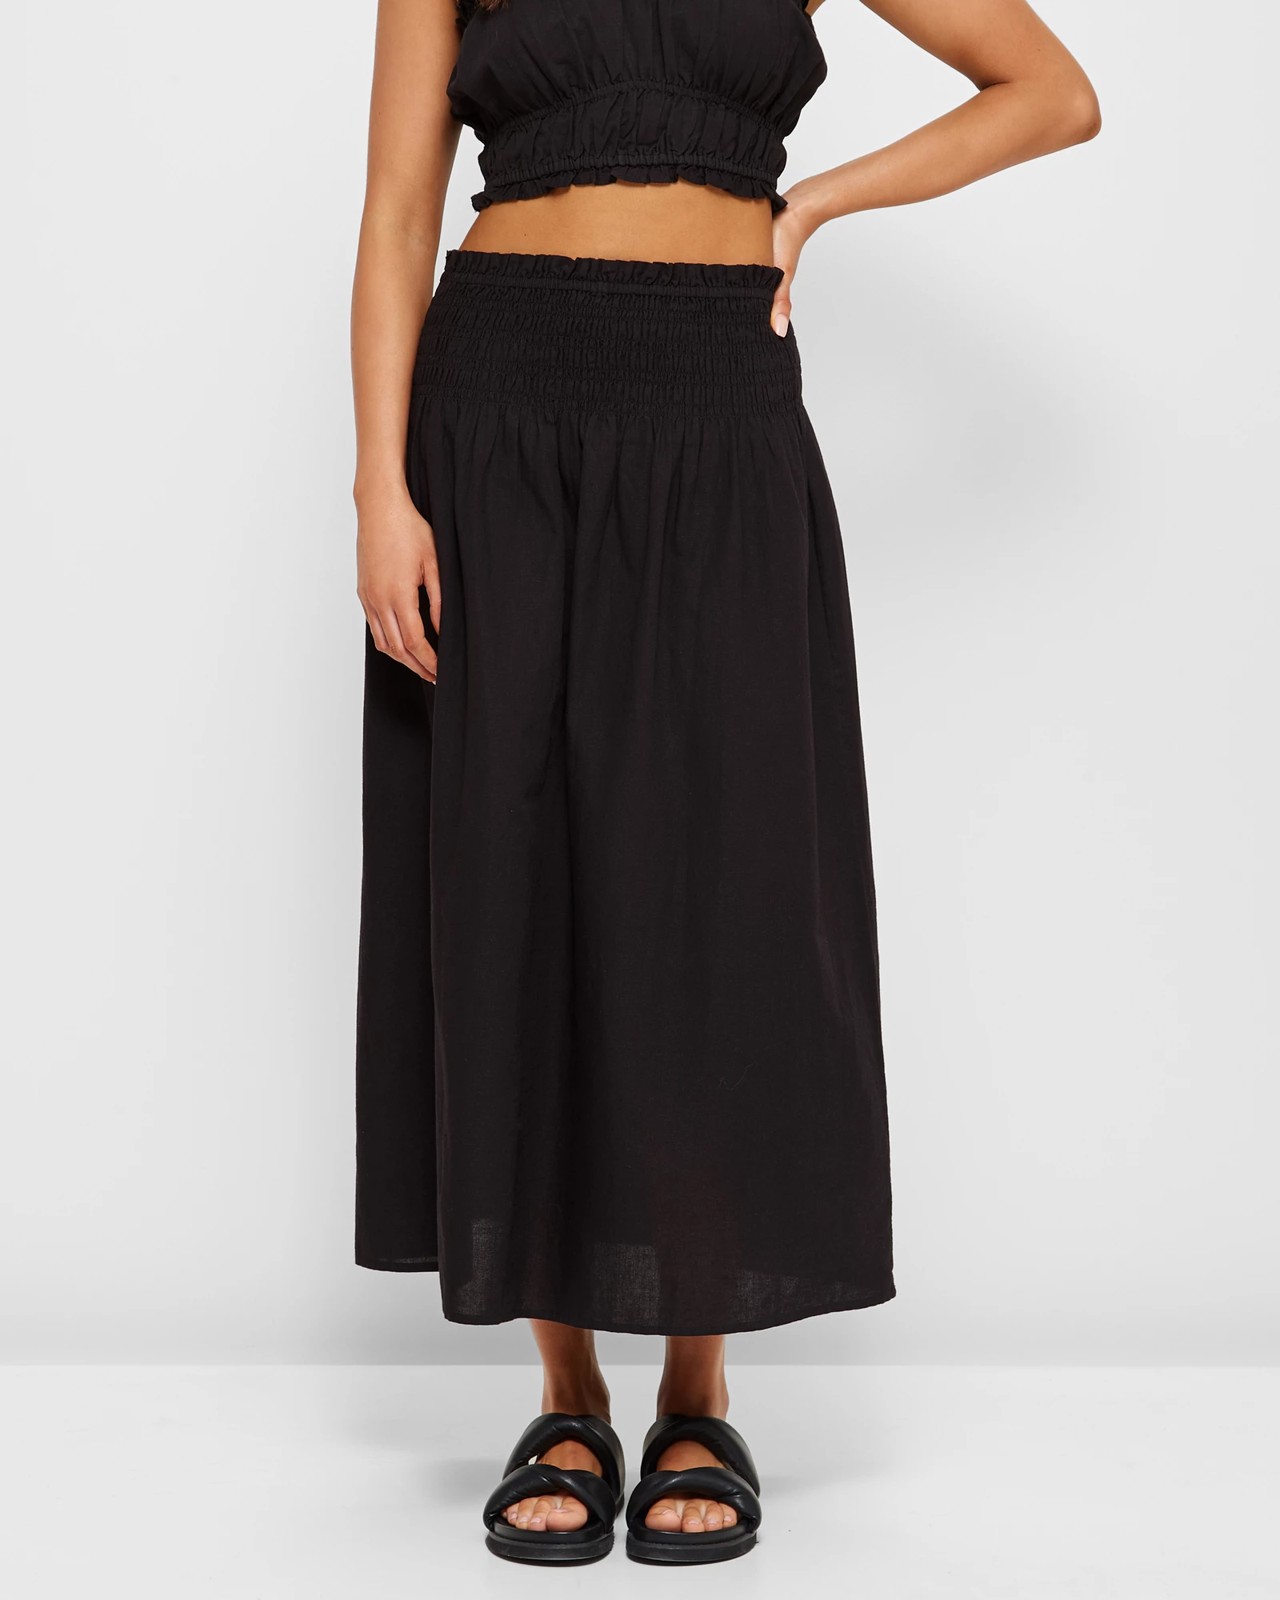 Black High Waisted Skirt : Target